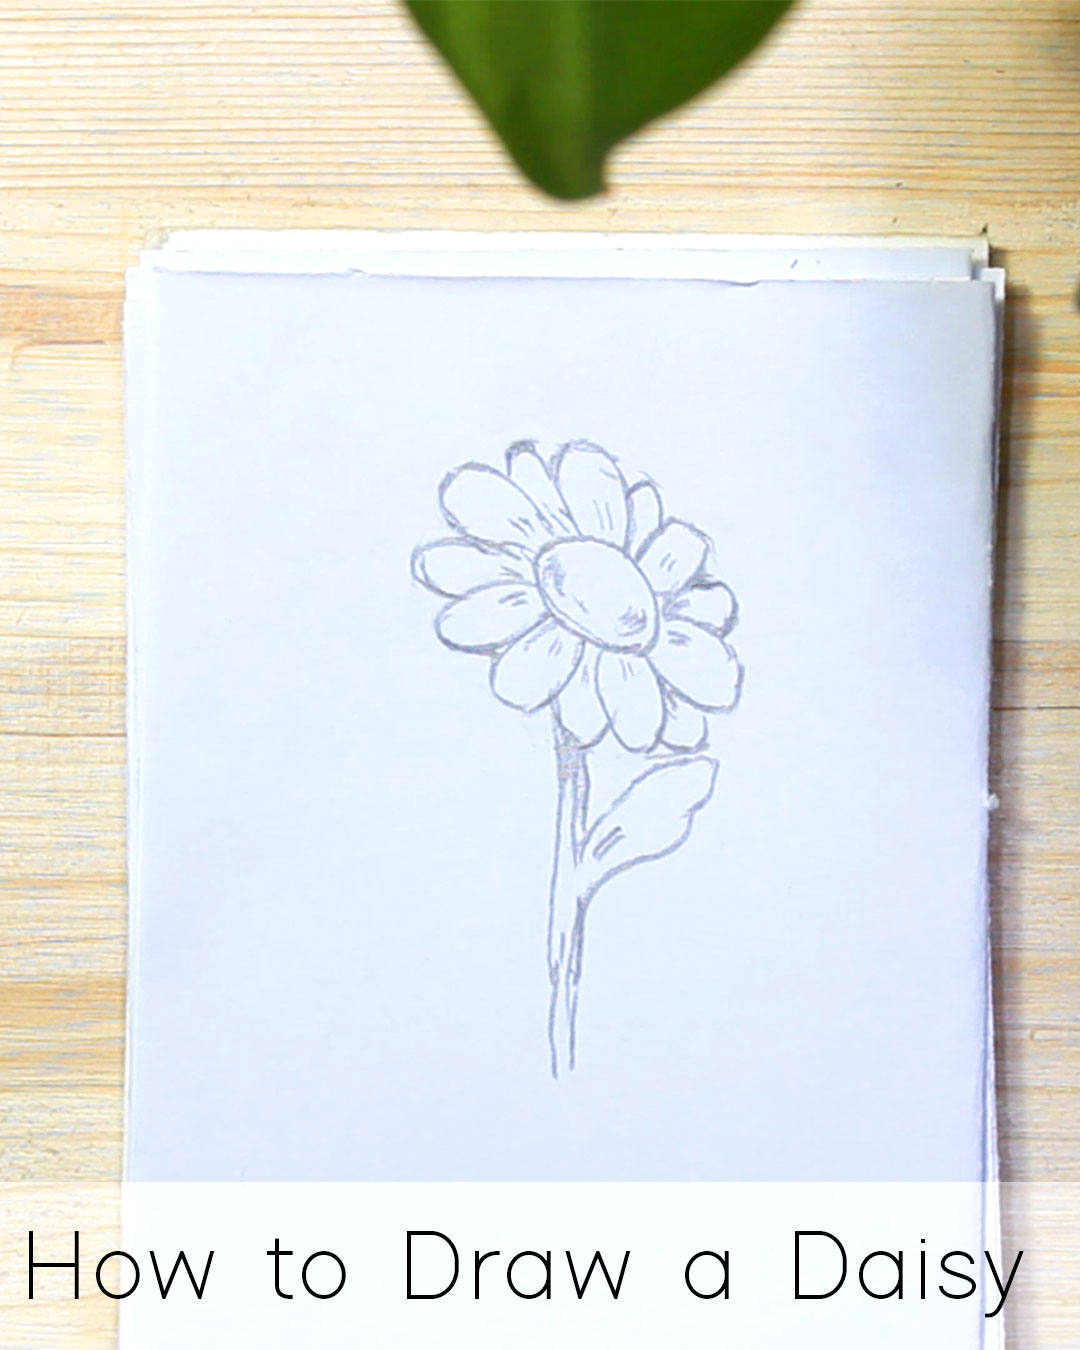 How to Draw a Daisy: Realistic daisy drawing & daisy sketch